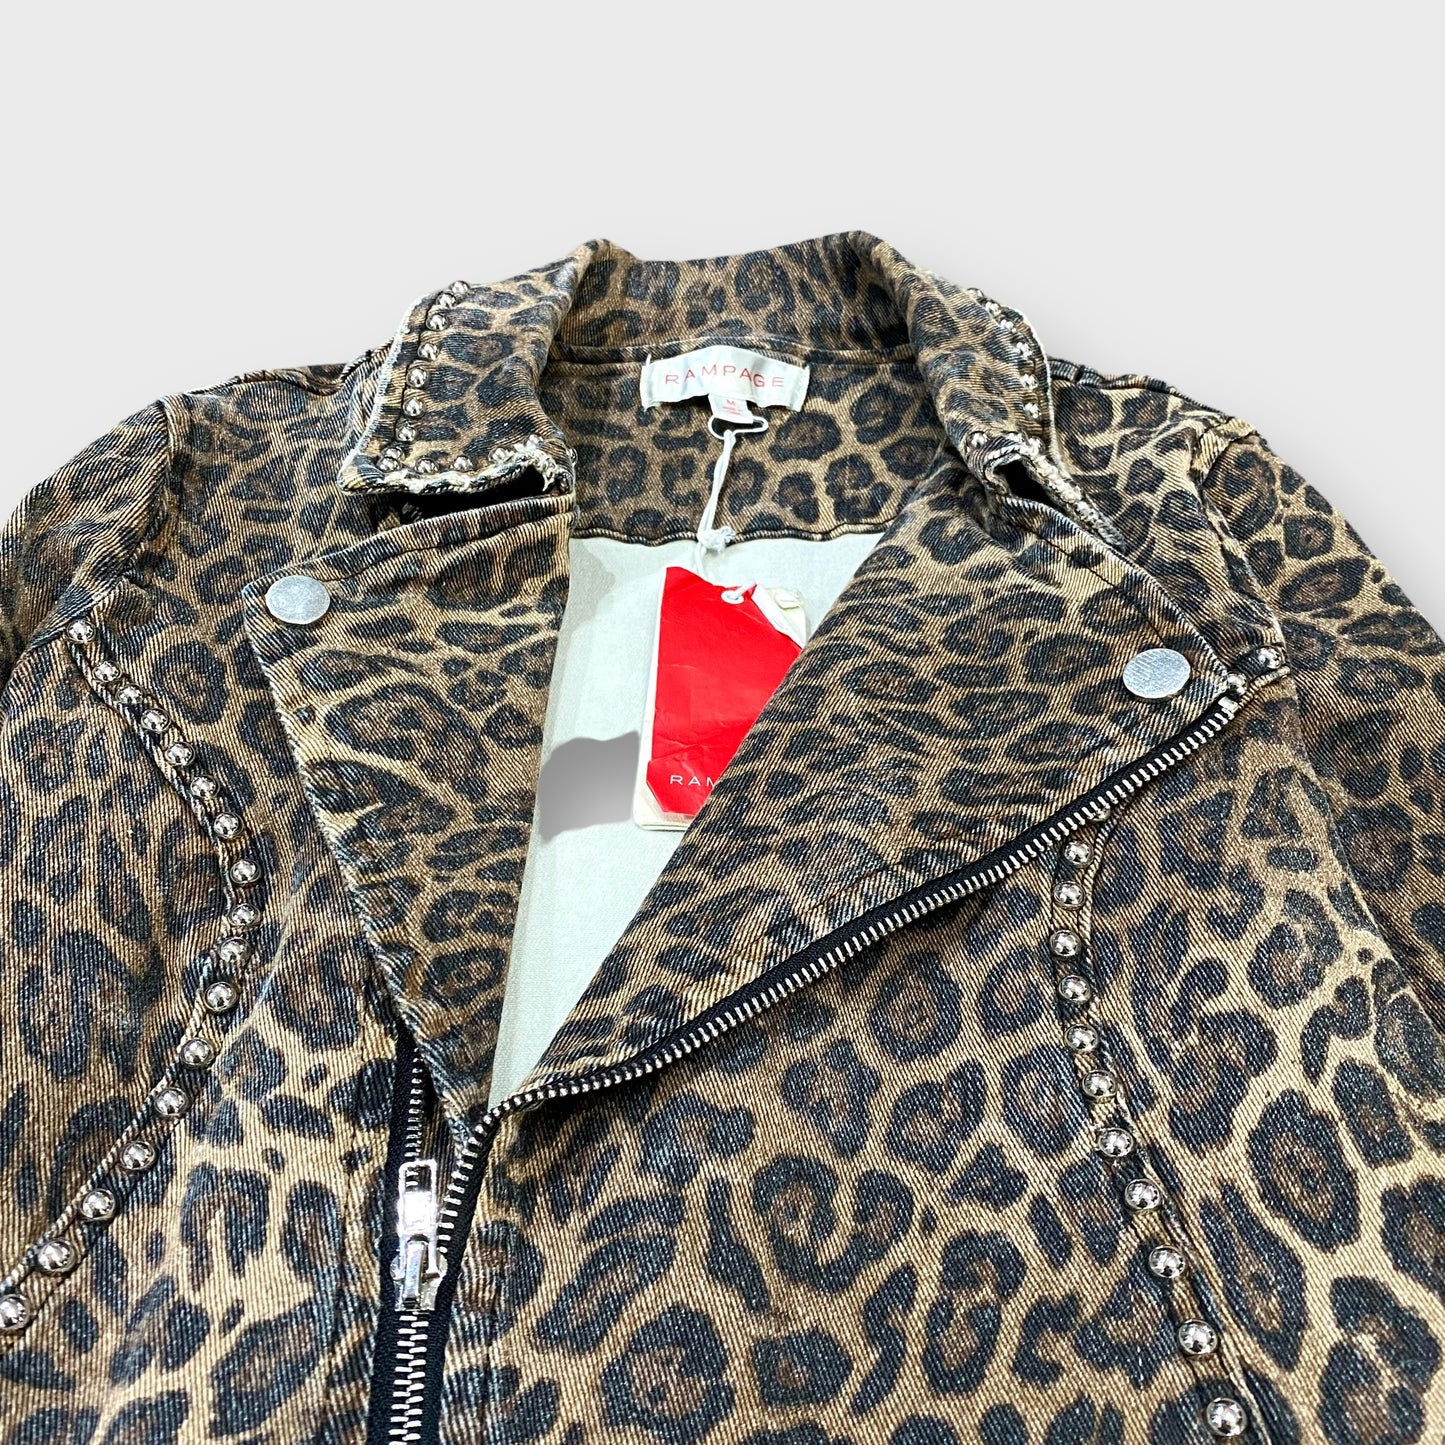 "RAMPAGE" N.O.S Leopard pattern cotton double riders jacket